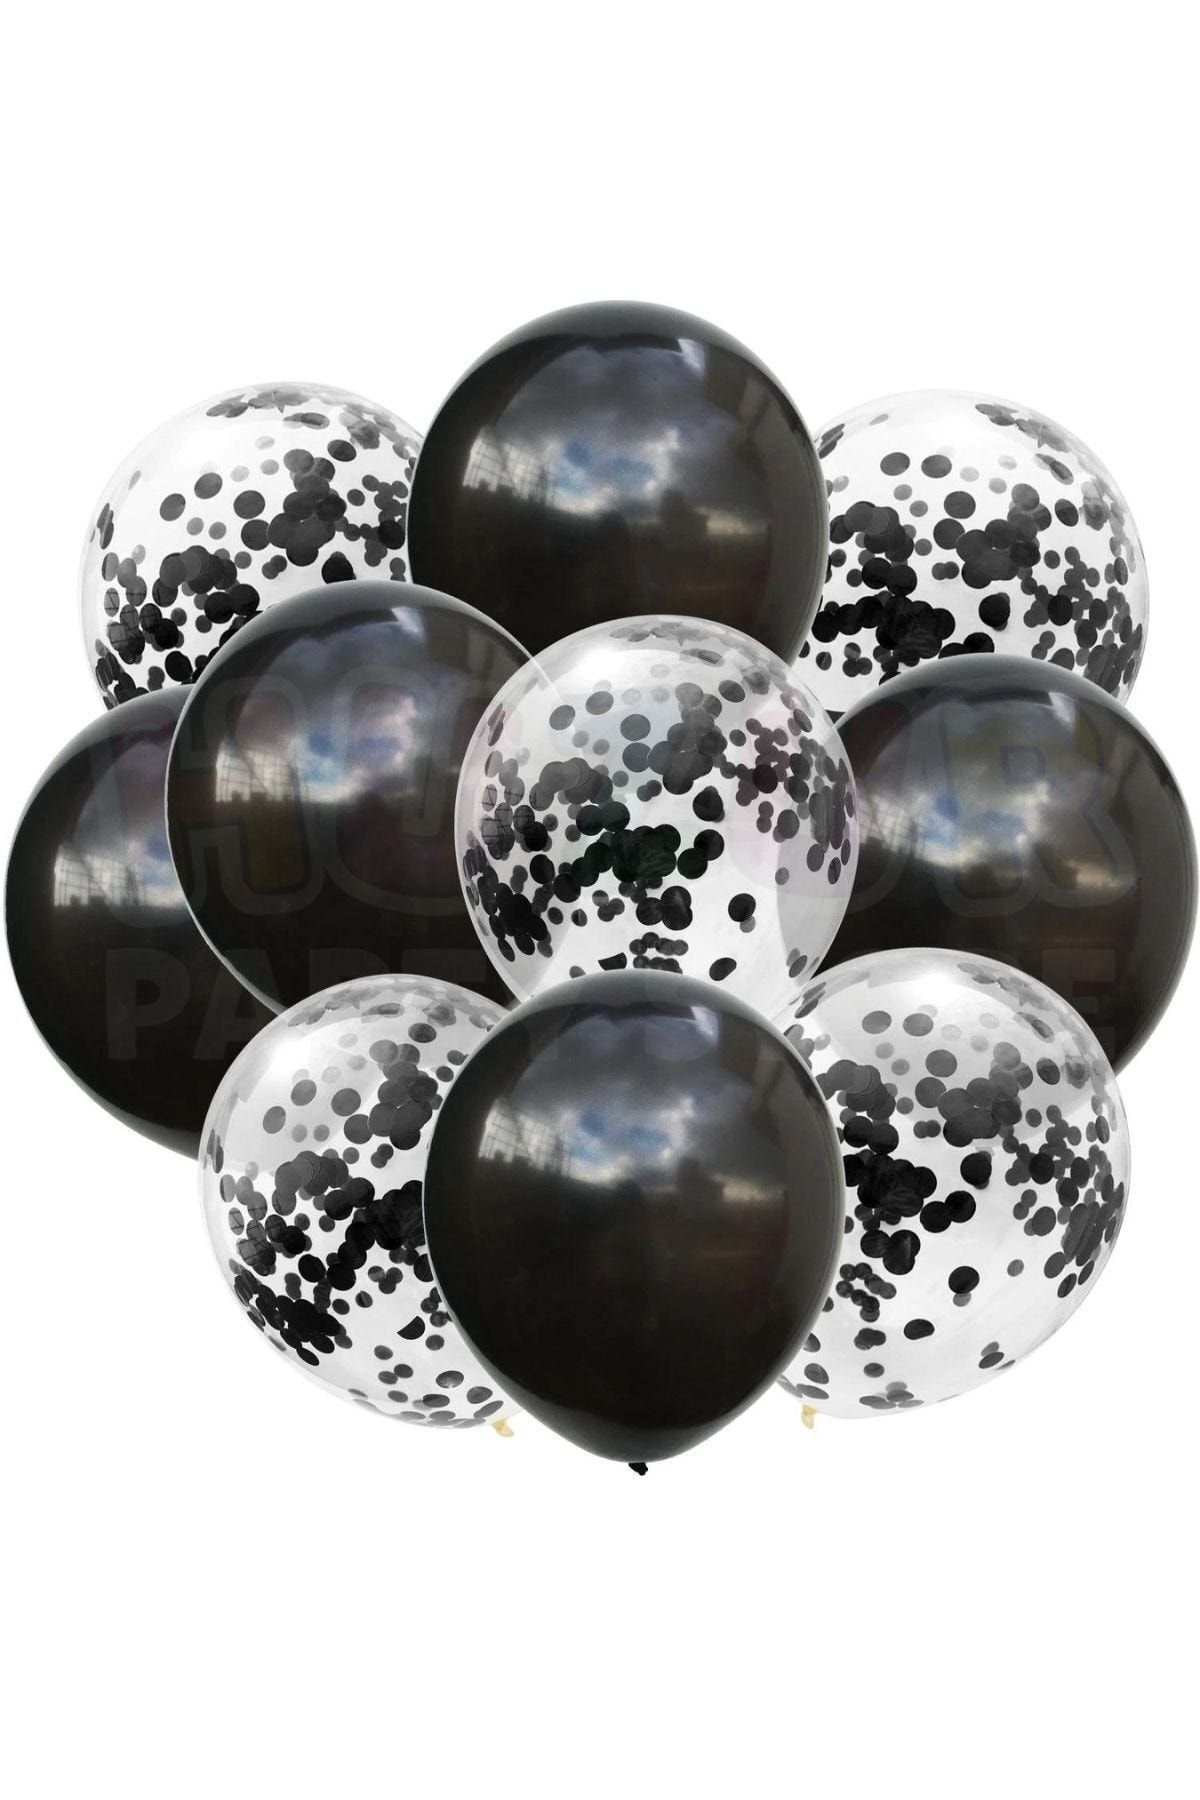 Huzur Party Store Siyah Konfetili Şeffaf Ve Siyah Metalik Balon Seti 20 Adet 30 Cm Içi Gözüken Pullu Balon Pulu Parti